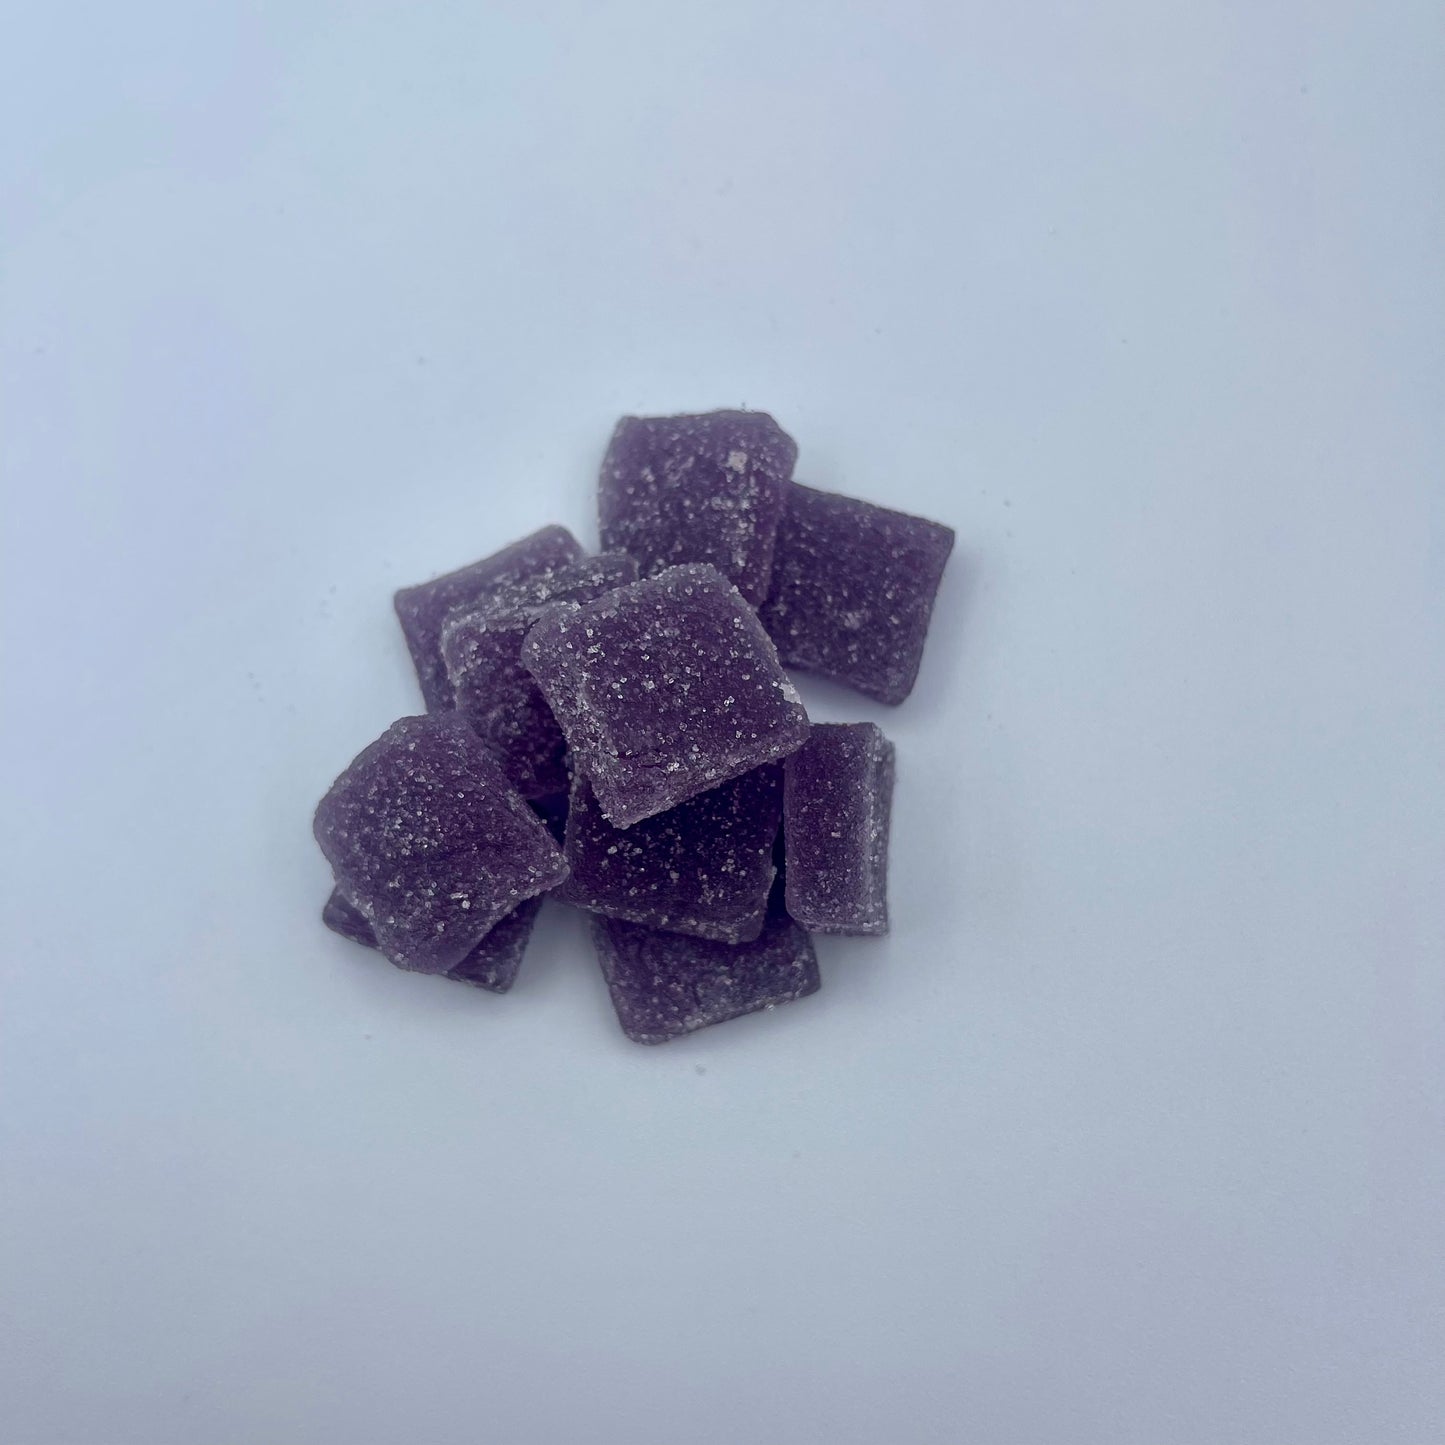 THC + CBD 100mg - Gummies 10 Pack of Edibles - Mixed Berry